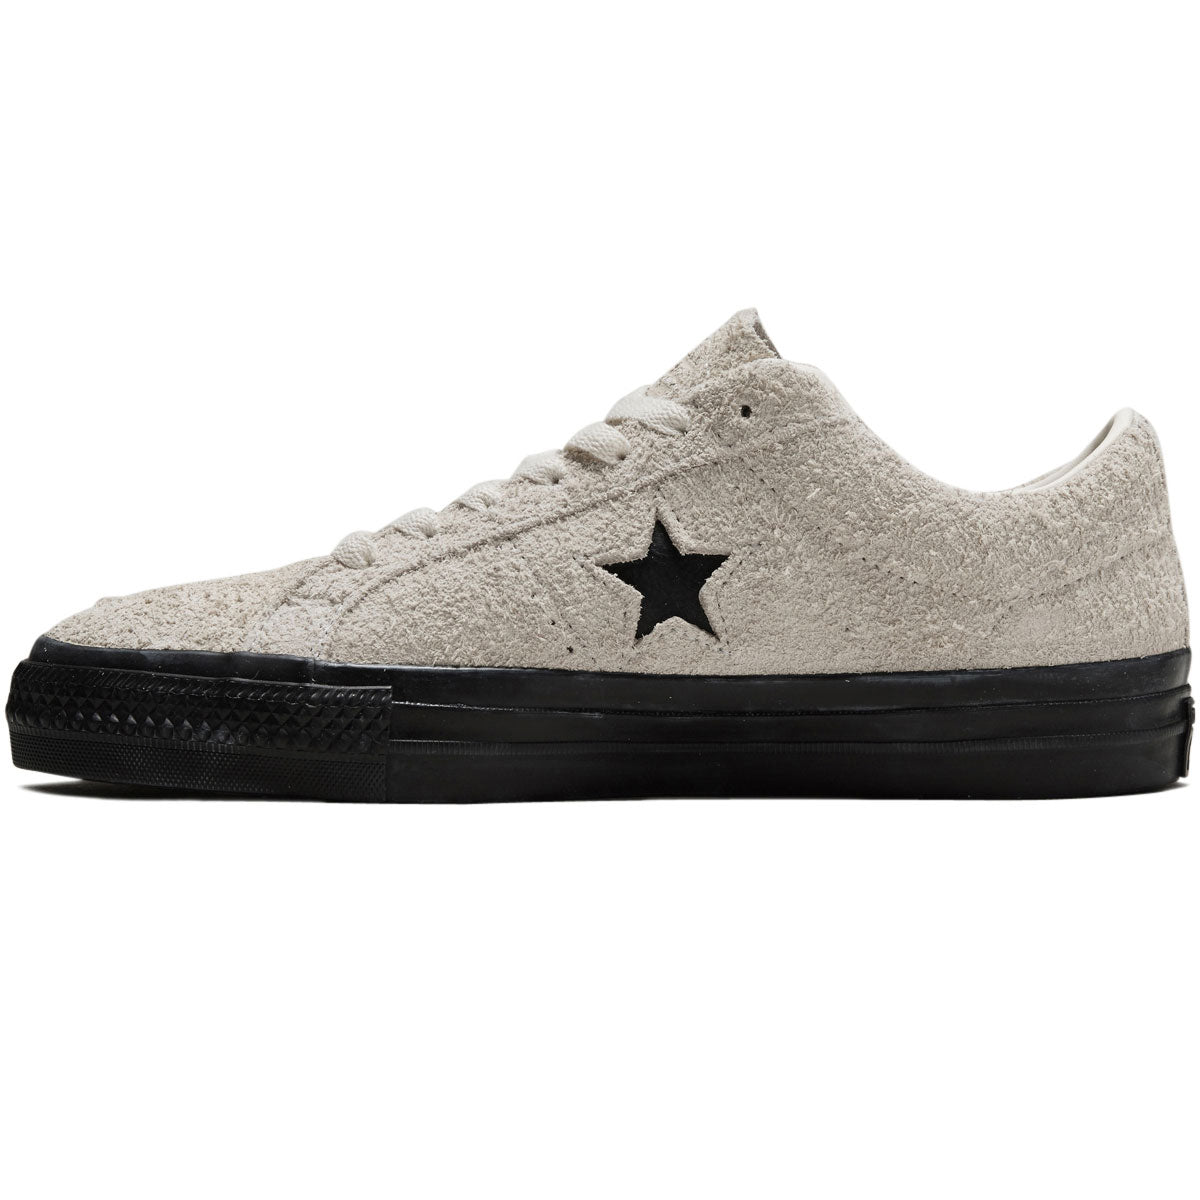 Converse One Star Pro Shaggy Suede Shoes - Egret/Egret/Black CCS